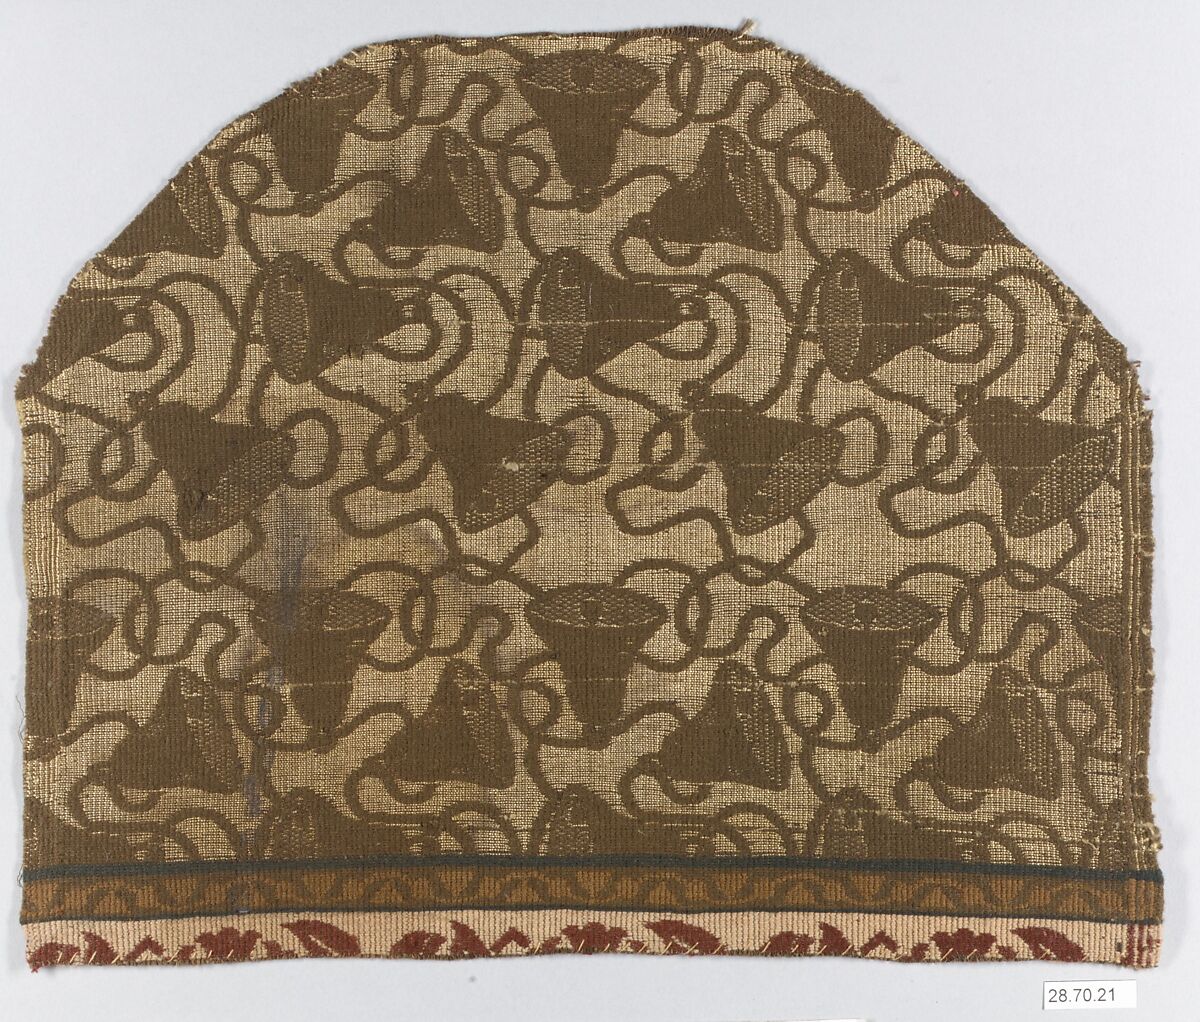 Bell-pattern textile, Ida F. Clark (born 1858), Silk and wool, woven, American 